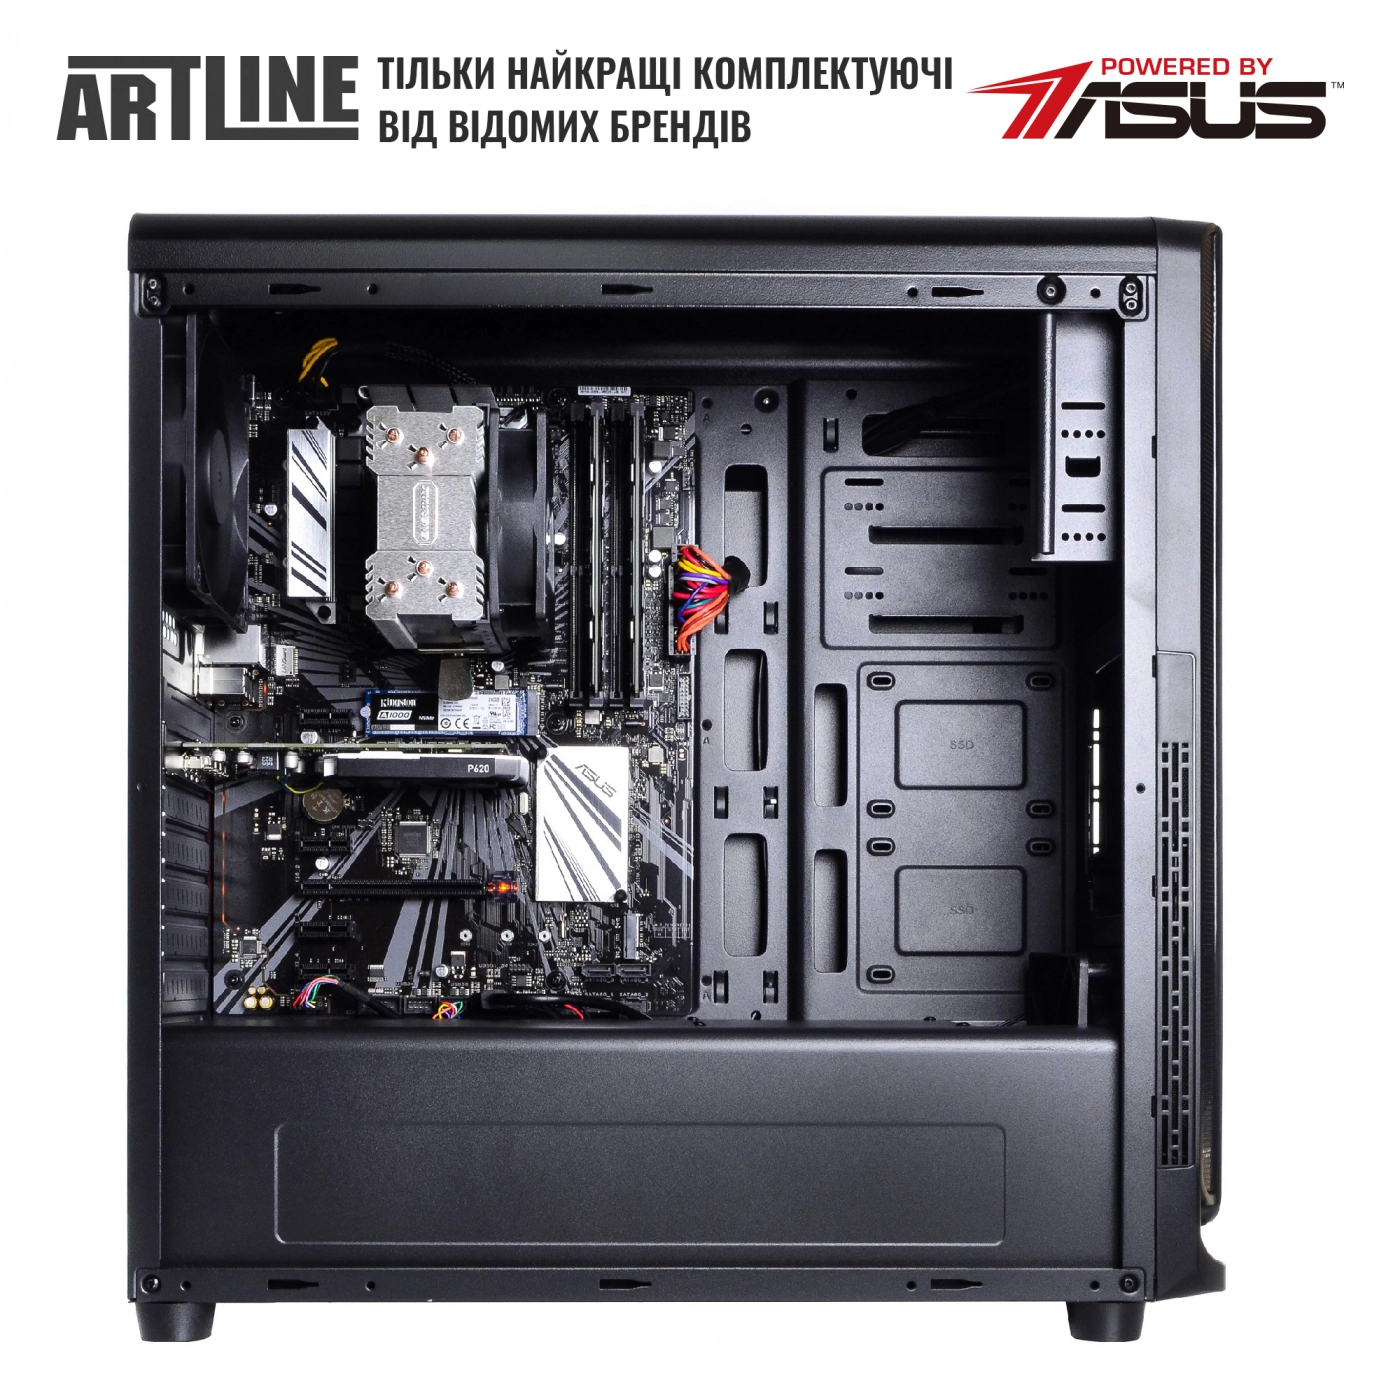 Купити Сервер ARTLINE Business T25v20 - фото 5